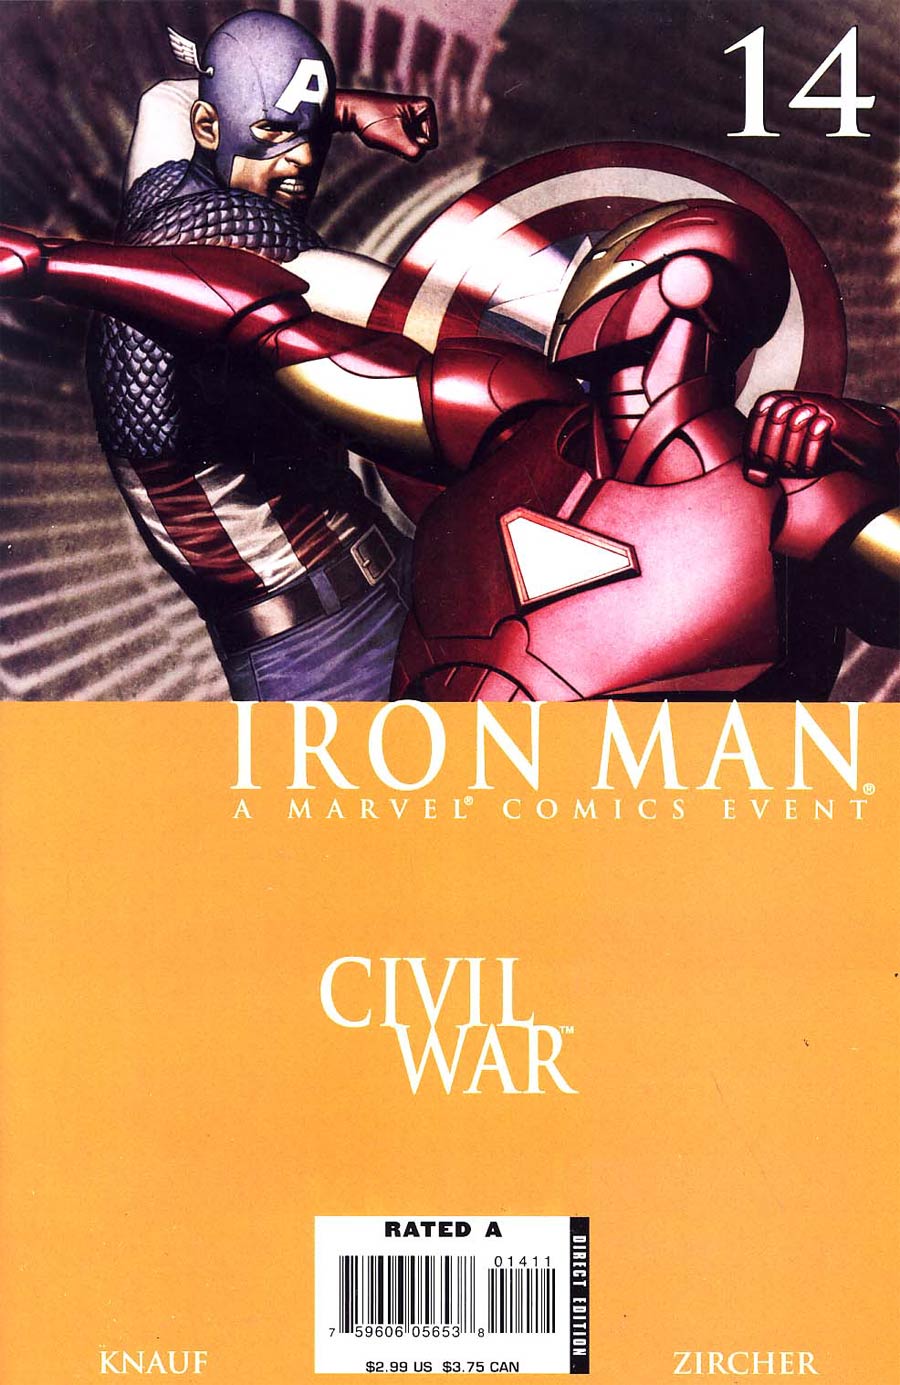 Iron Man Vol 4 #14 (Civil War Tie-In)